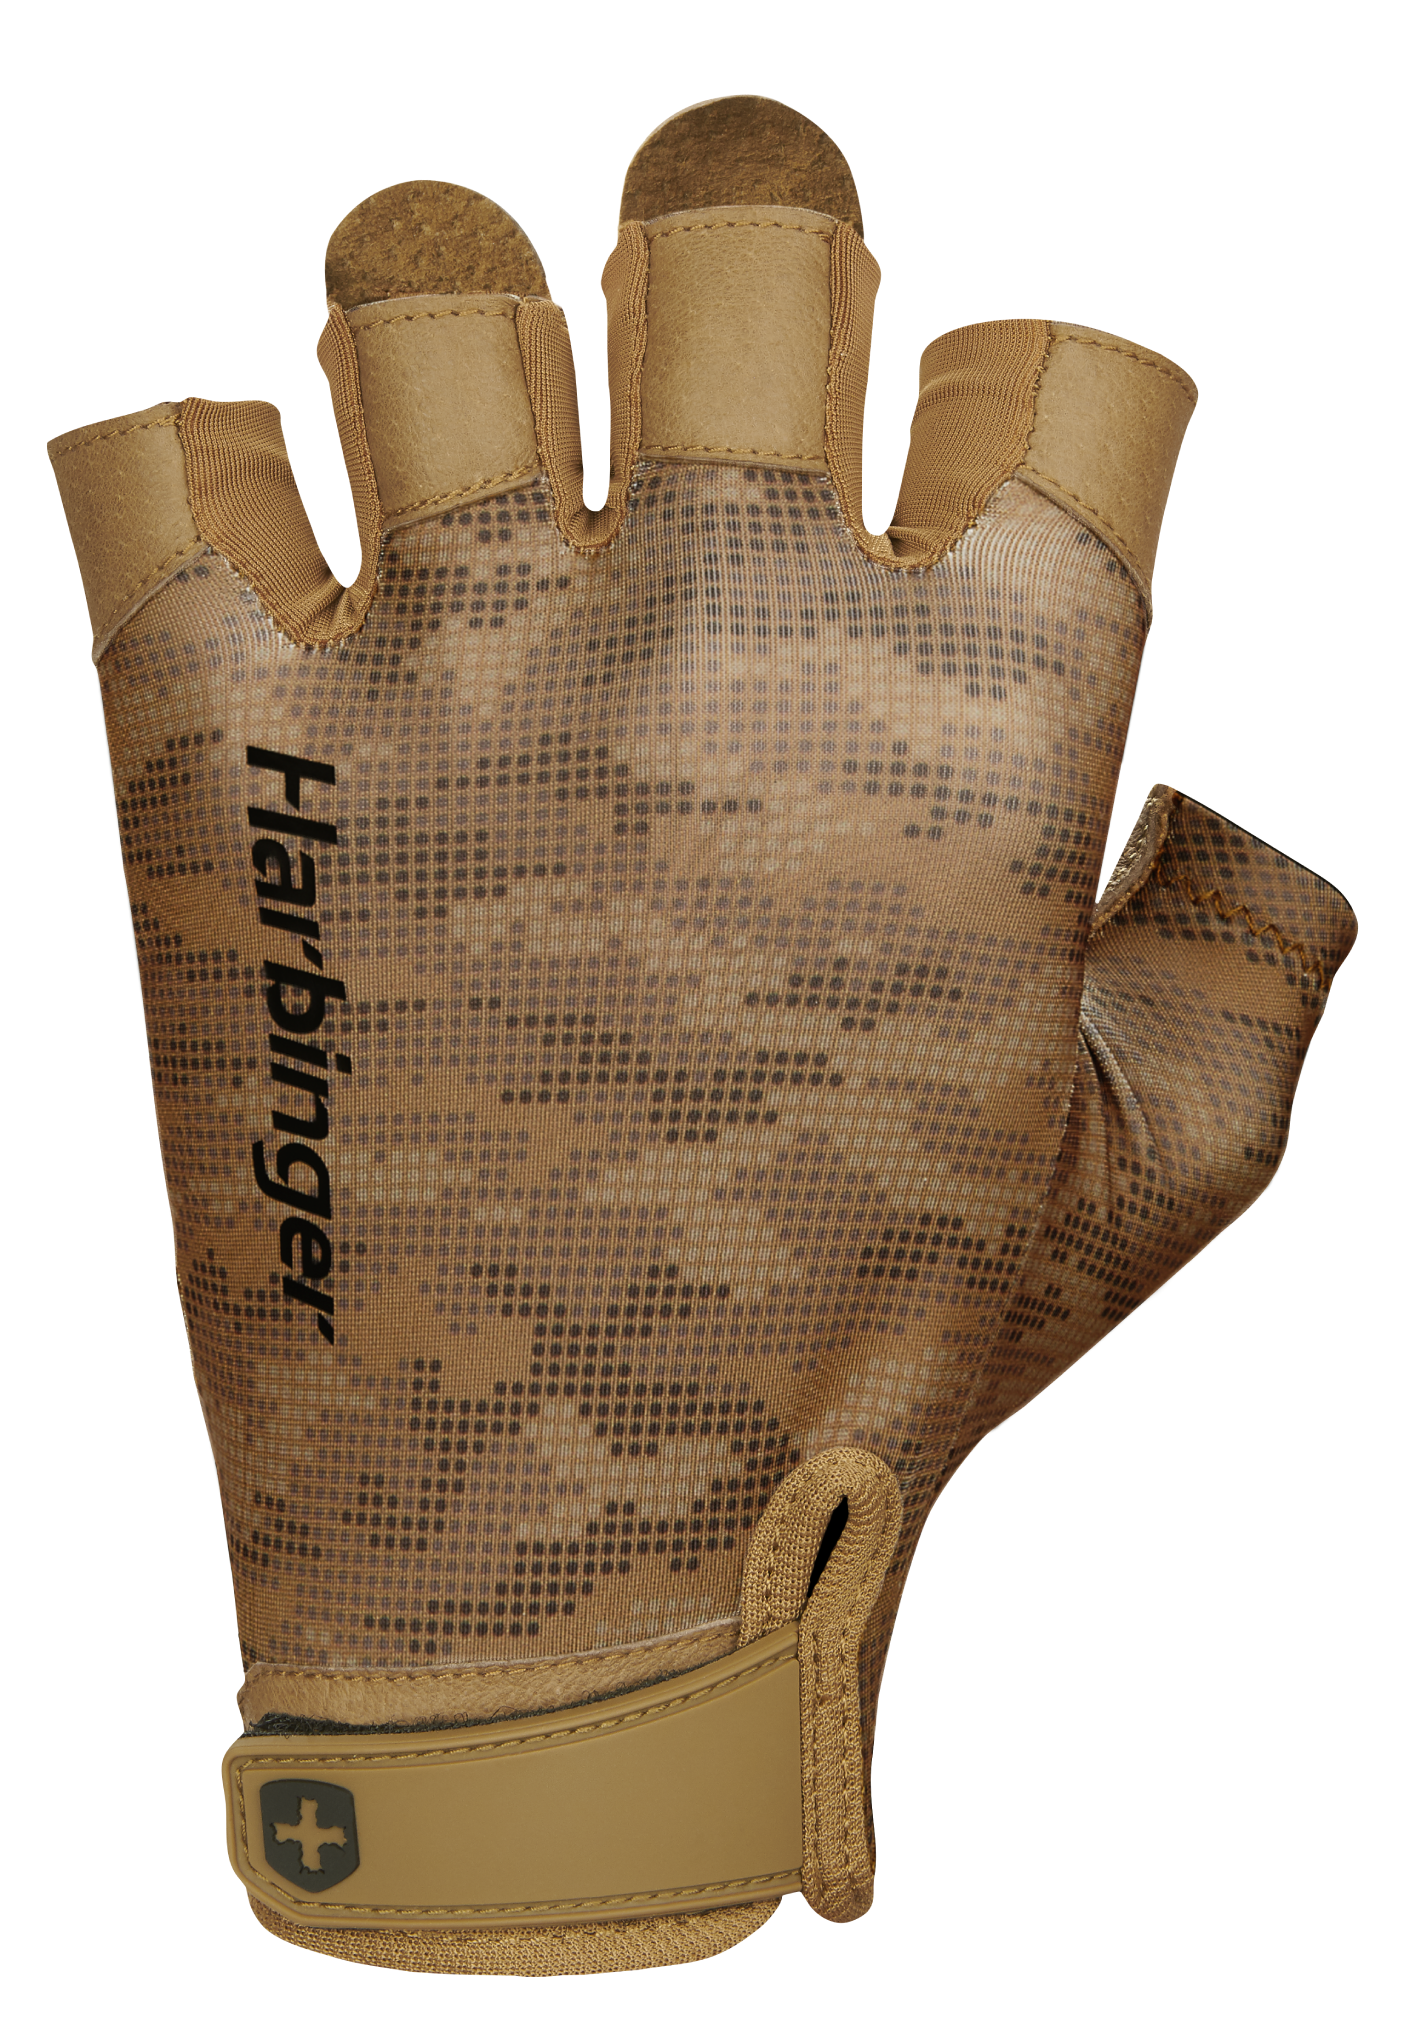 Harbinger Harbinger Pro 2.0 Unisex Fitness Handschoenen - Bruin - L